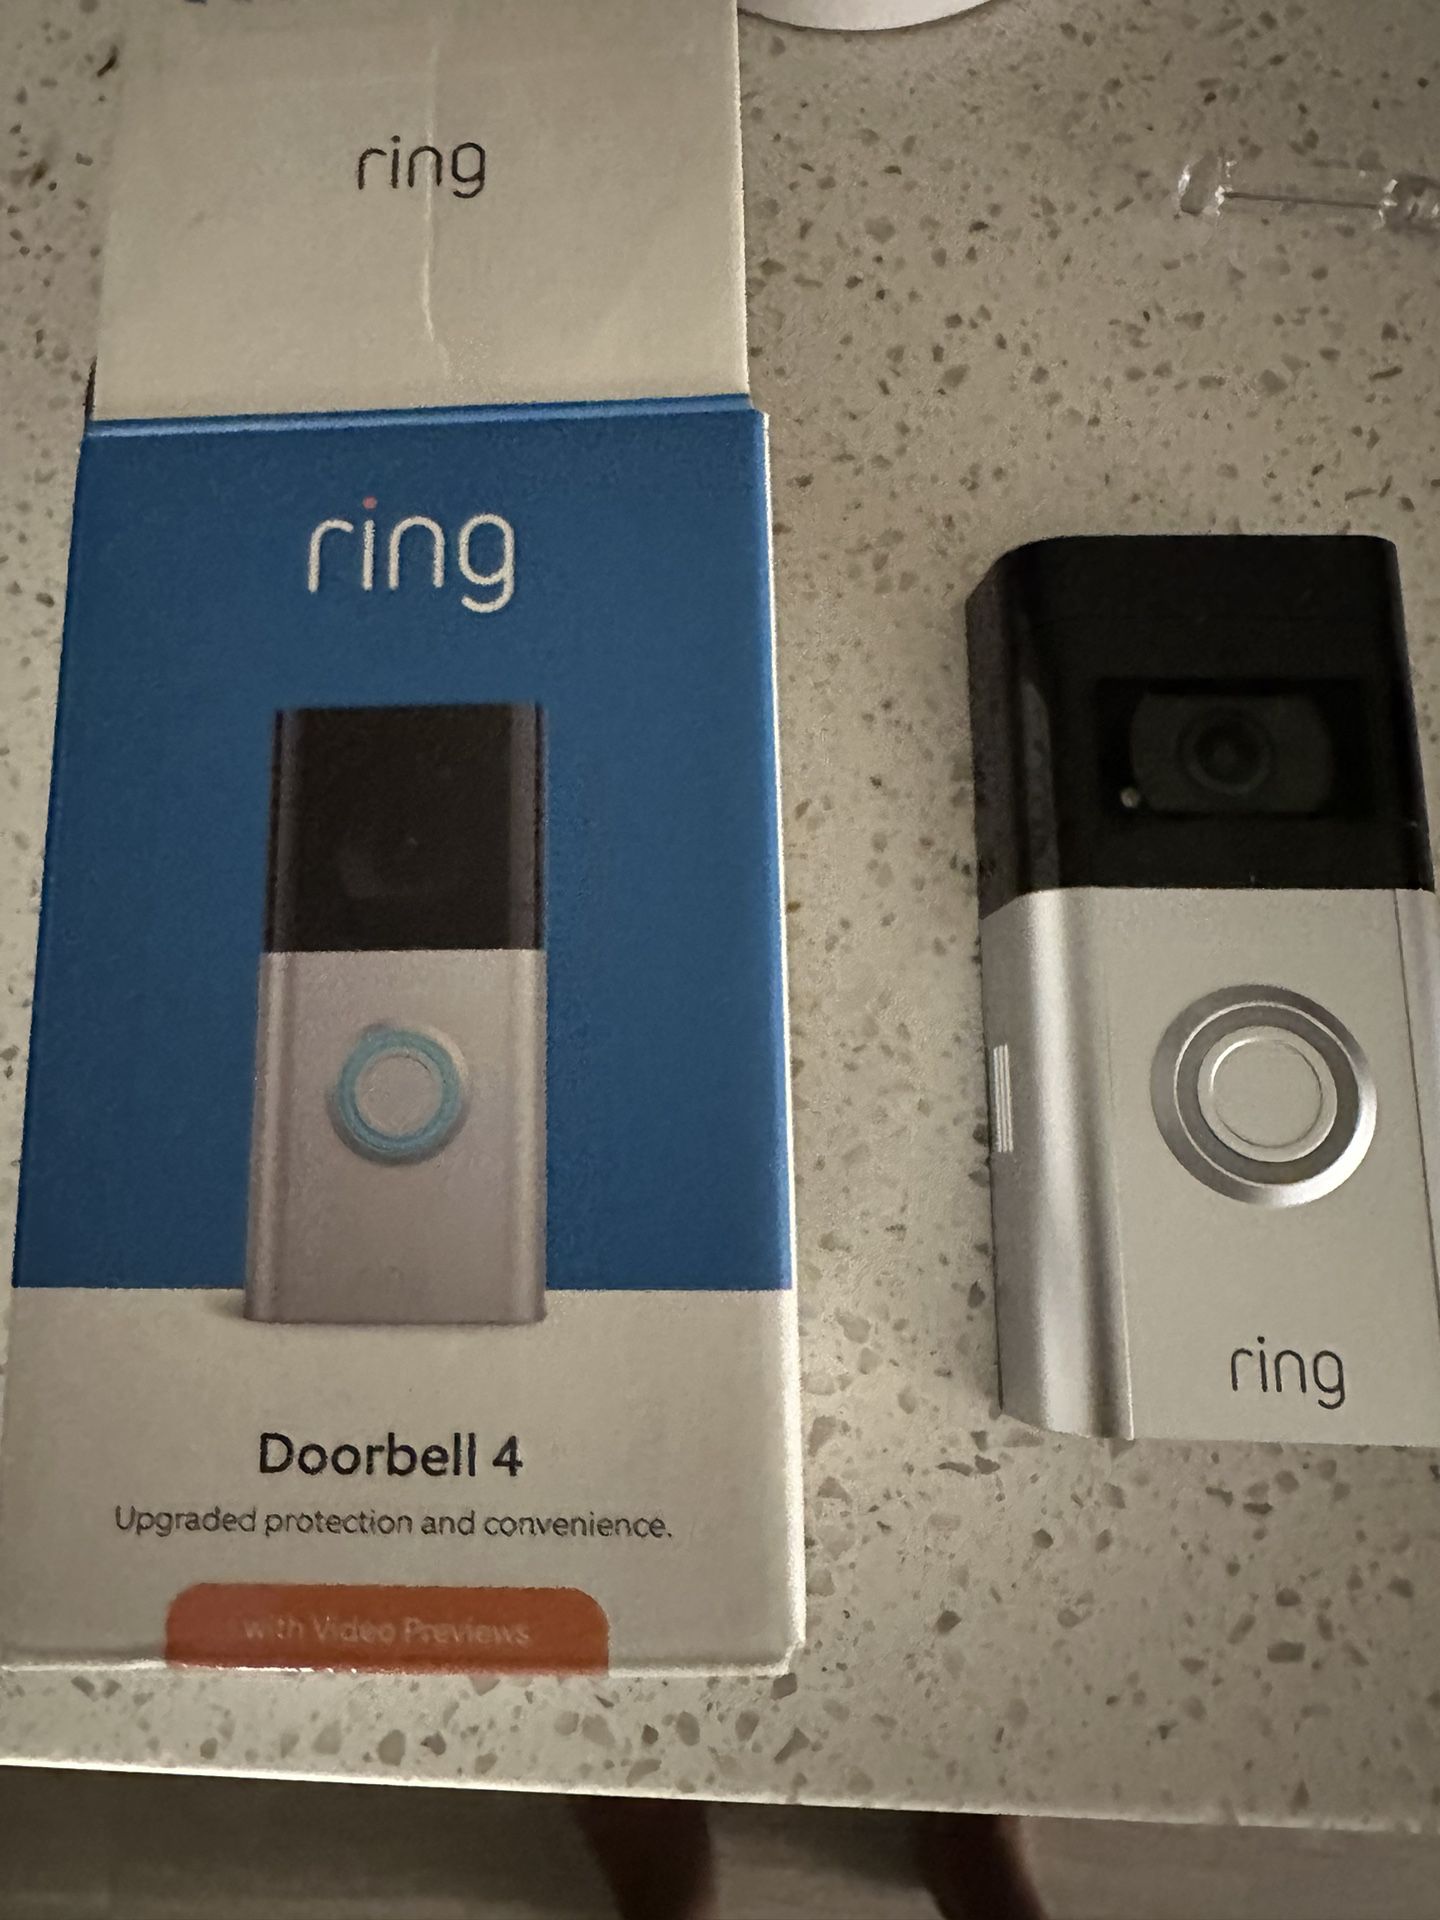 Ring camera 